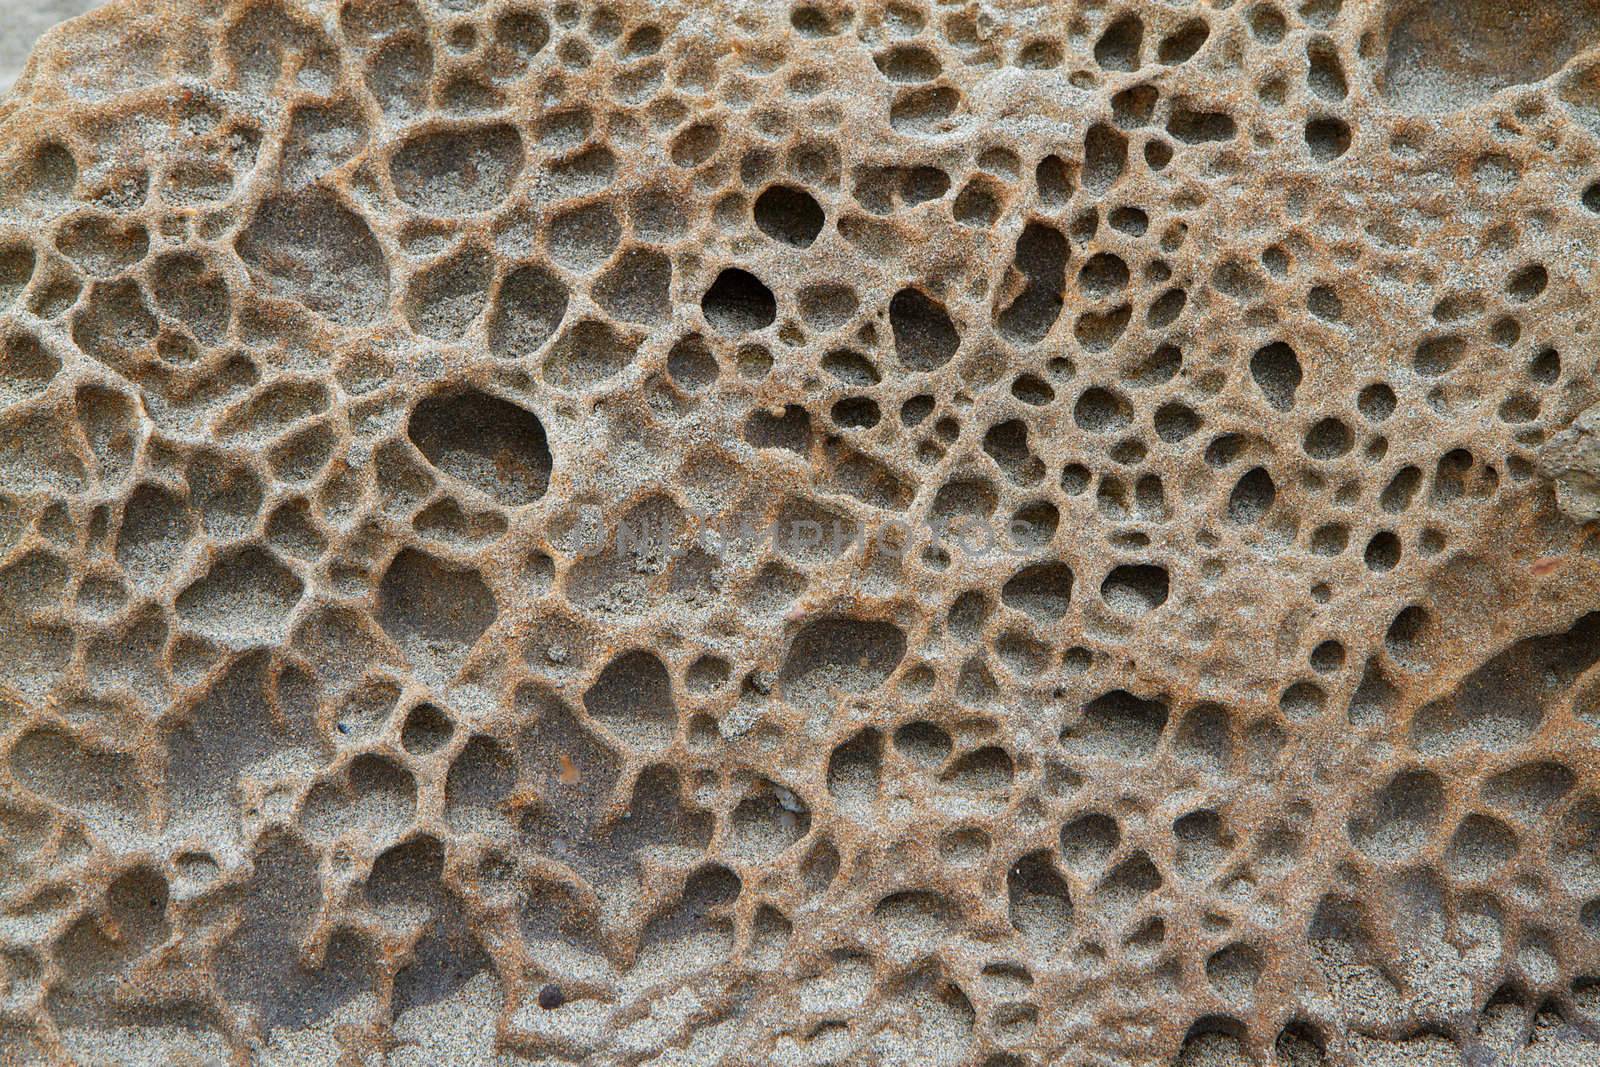 Sponge texture stone on beach near ocean